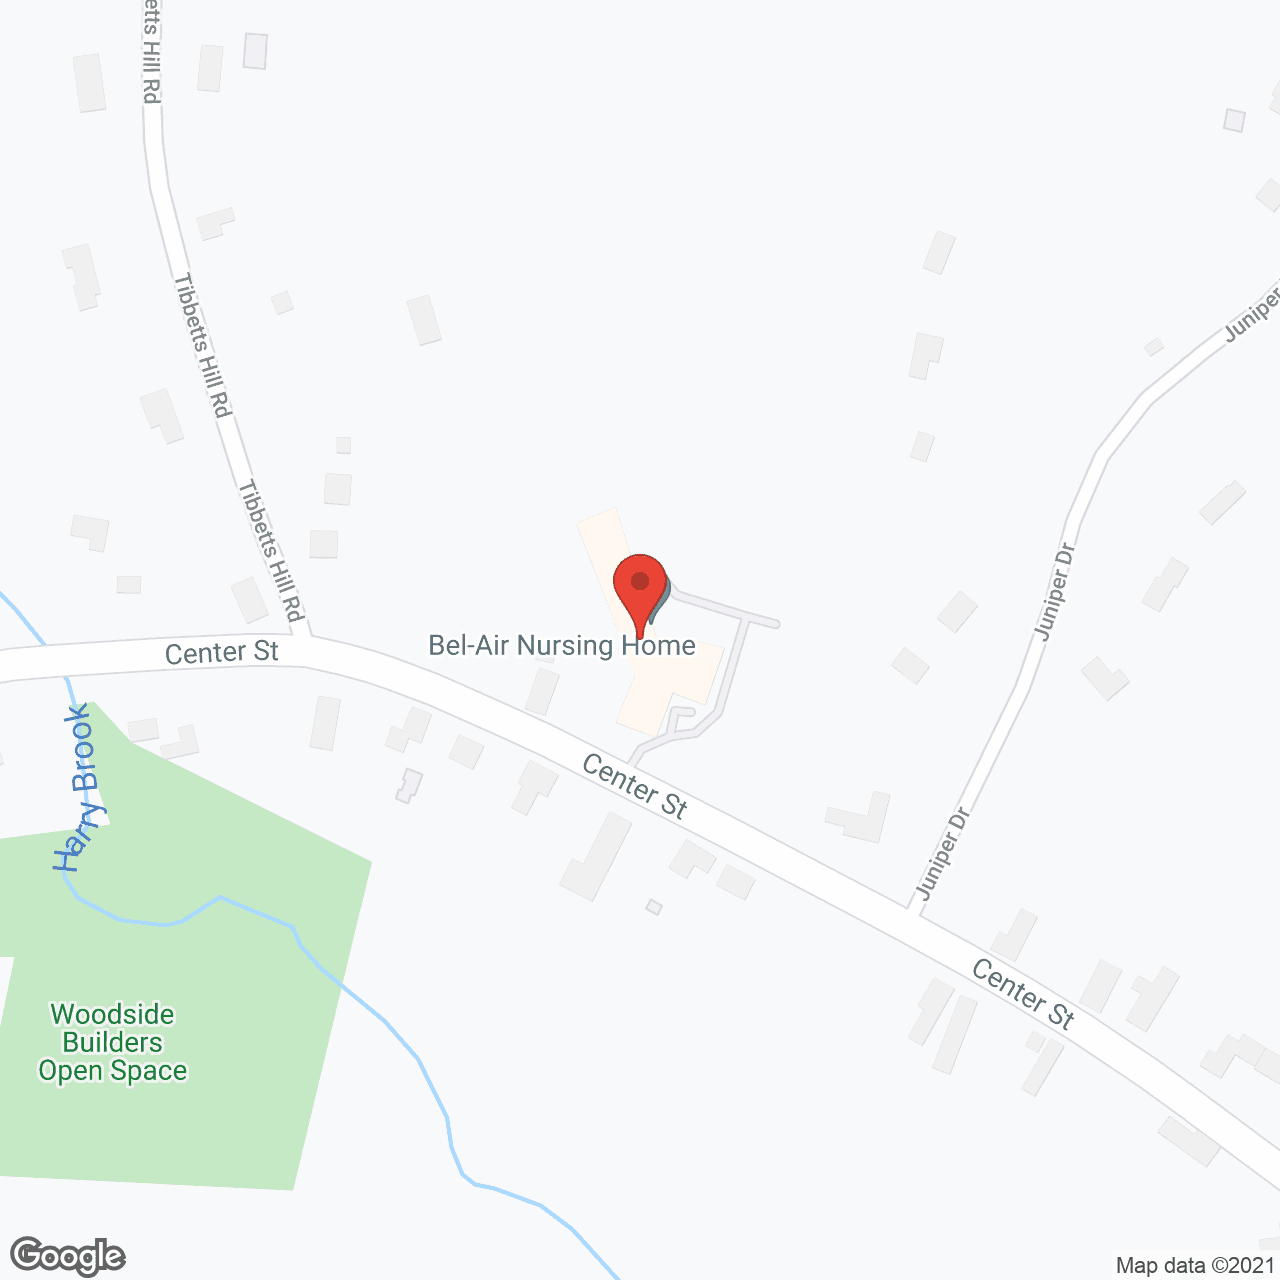 Bel-Air Nursing Home in google map